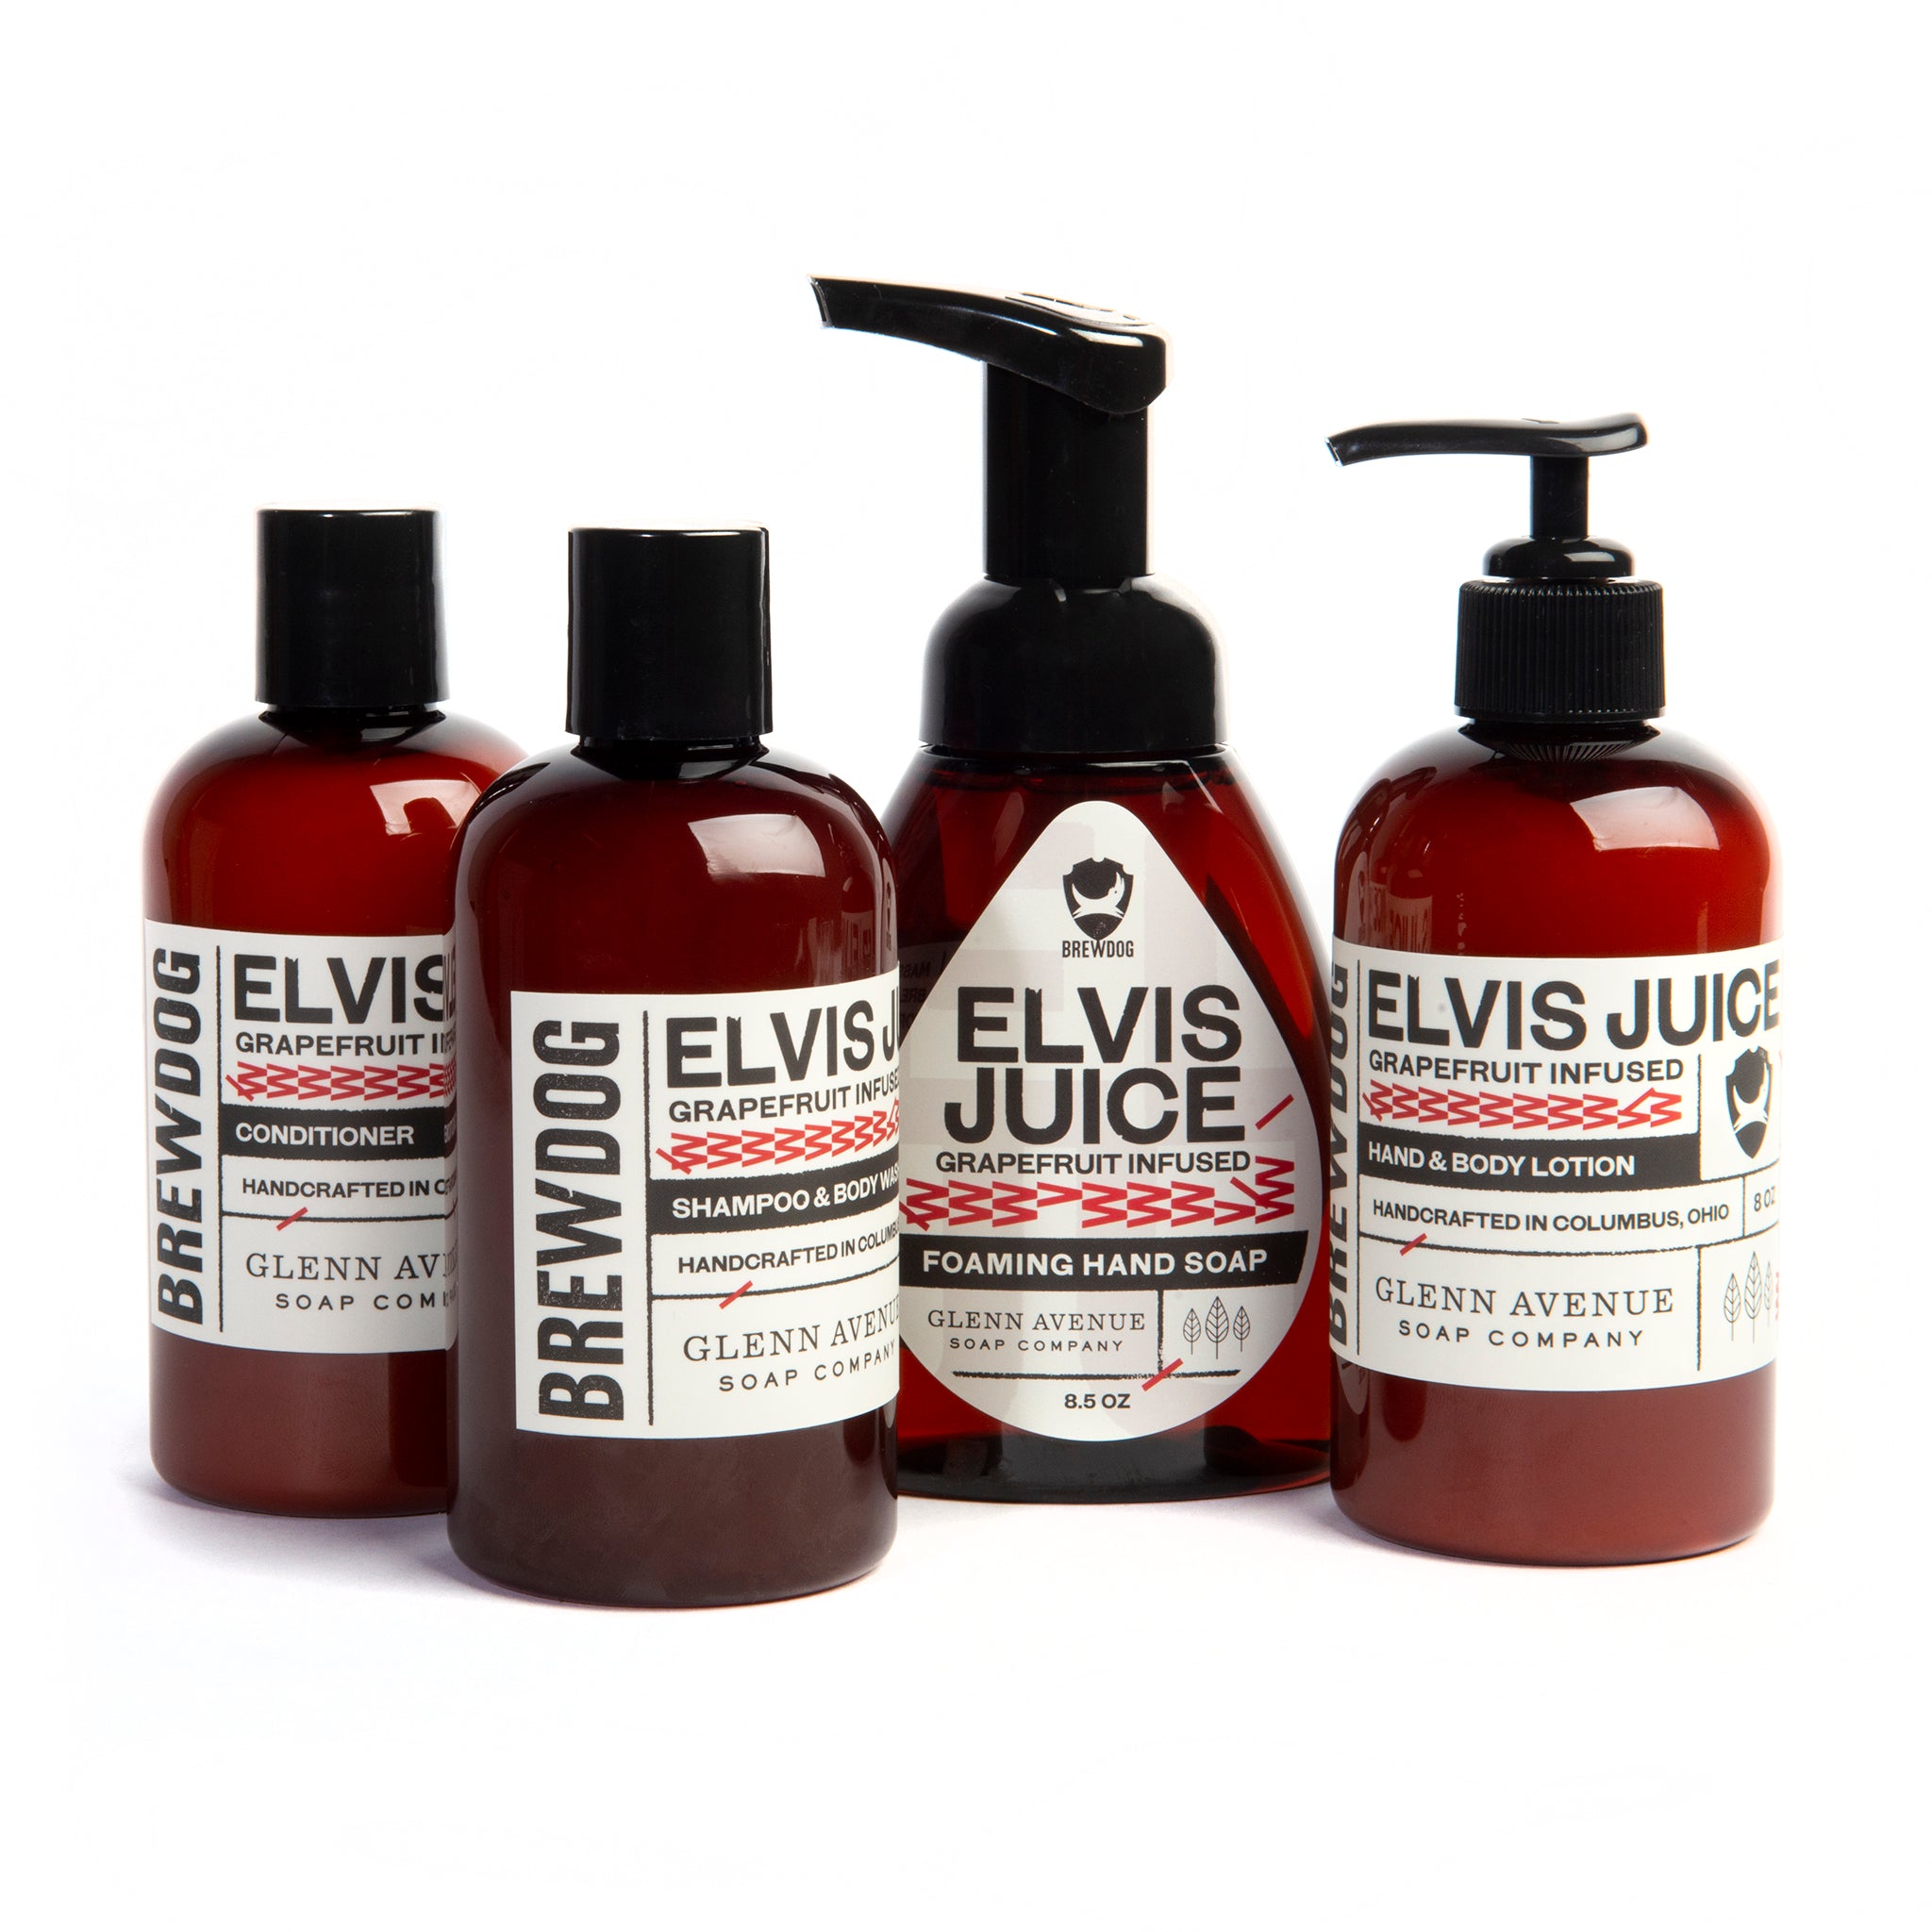 BrewDog Elvis Juice Foaming Hand Soap - Natural ingredients